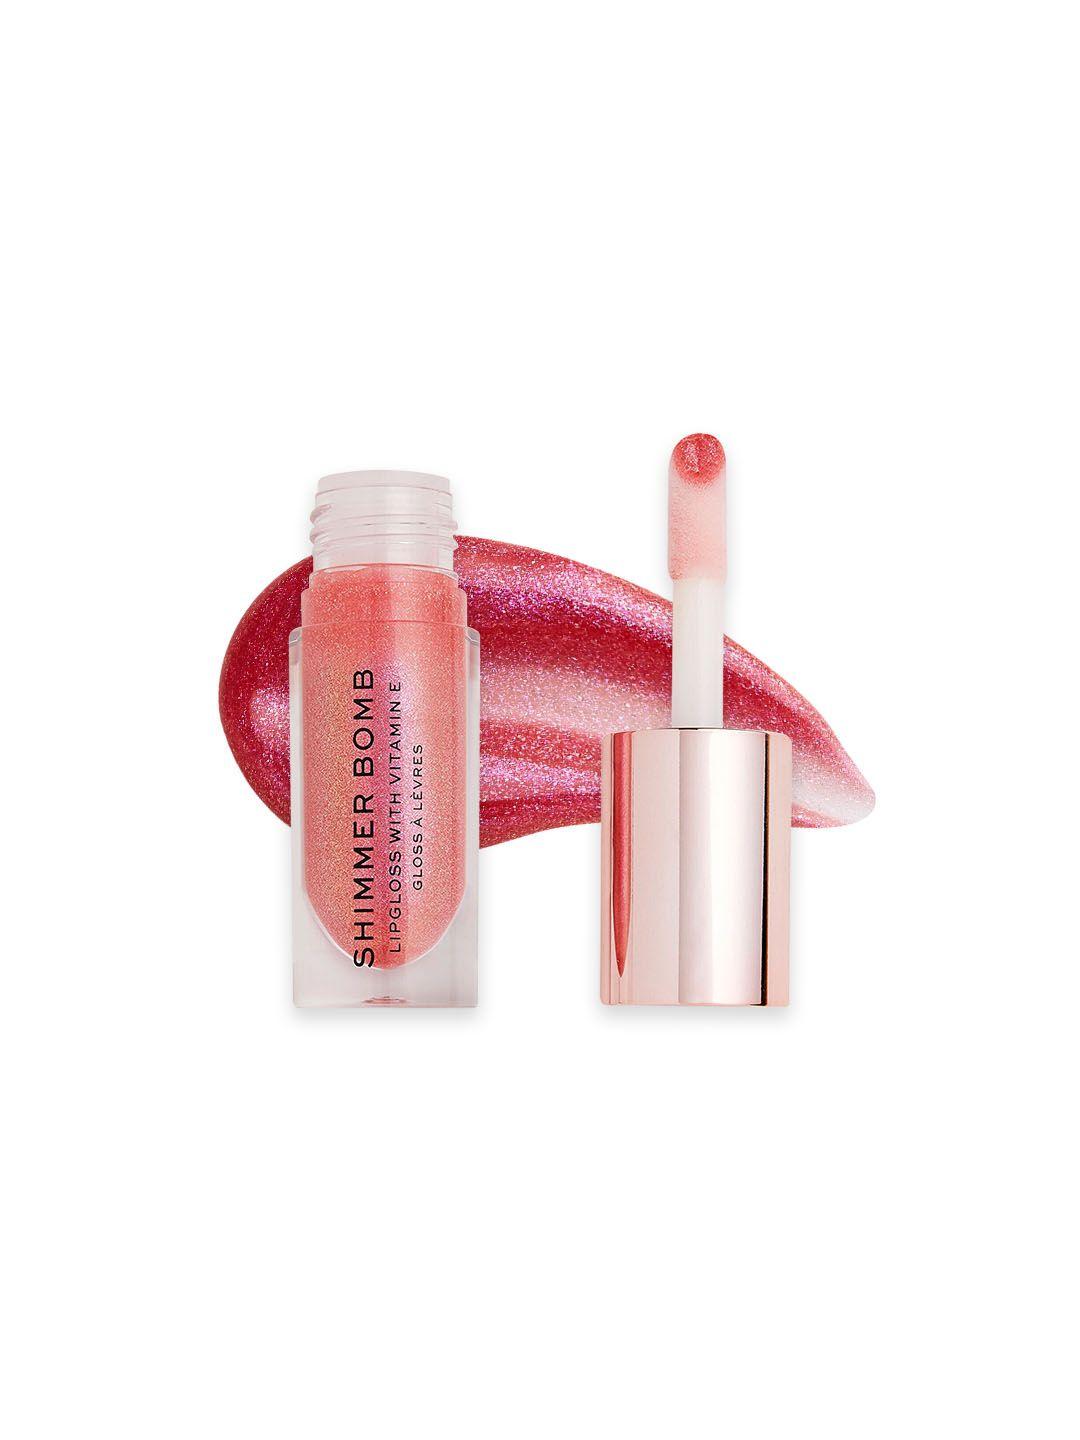 makeup revolution london shimmer bomb lip gloss with vitamin e 4.5ml - daydream pink